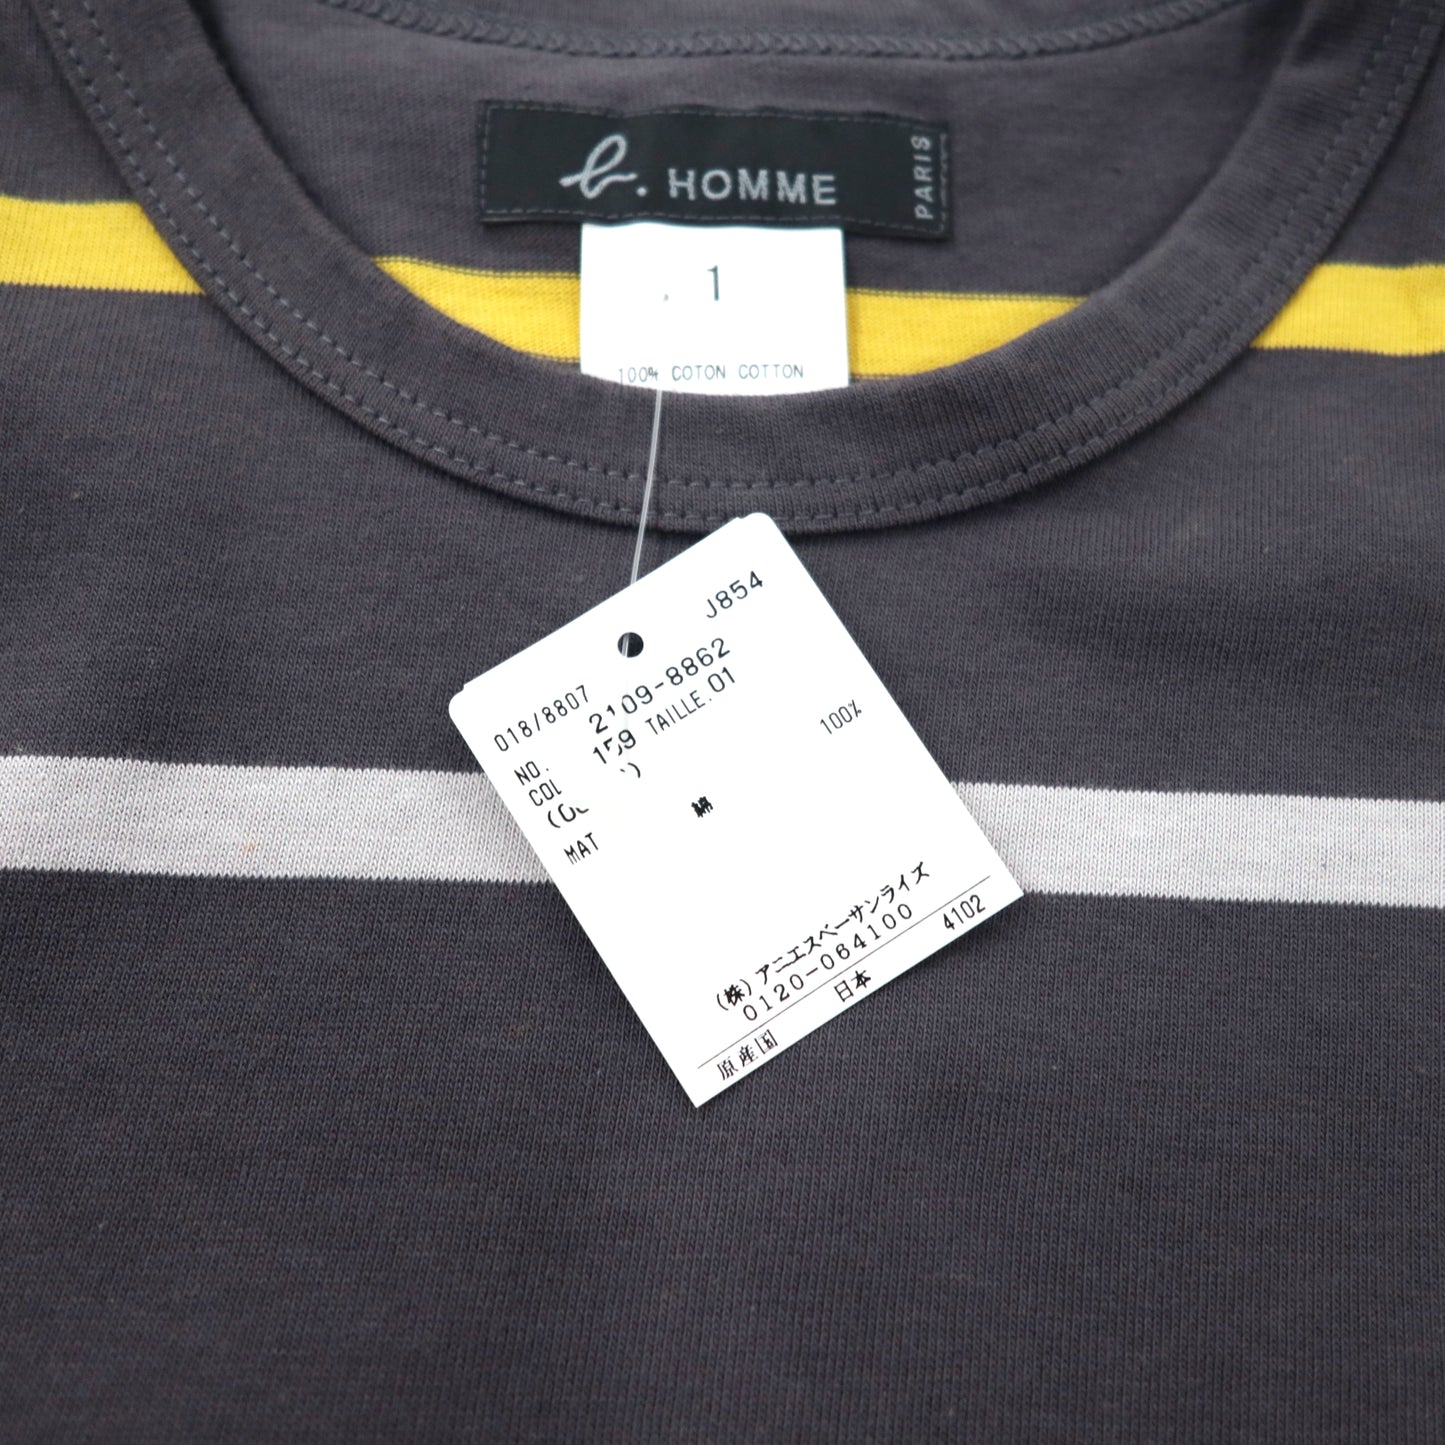 agnes b. HOMME ボーダー Tシャツ 1 グレー コットン 2109-8862 日本製 未使用品